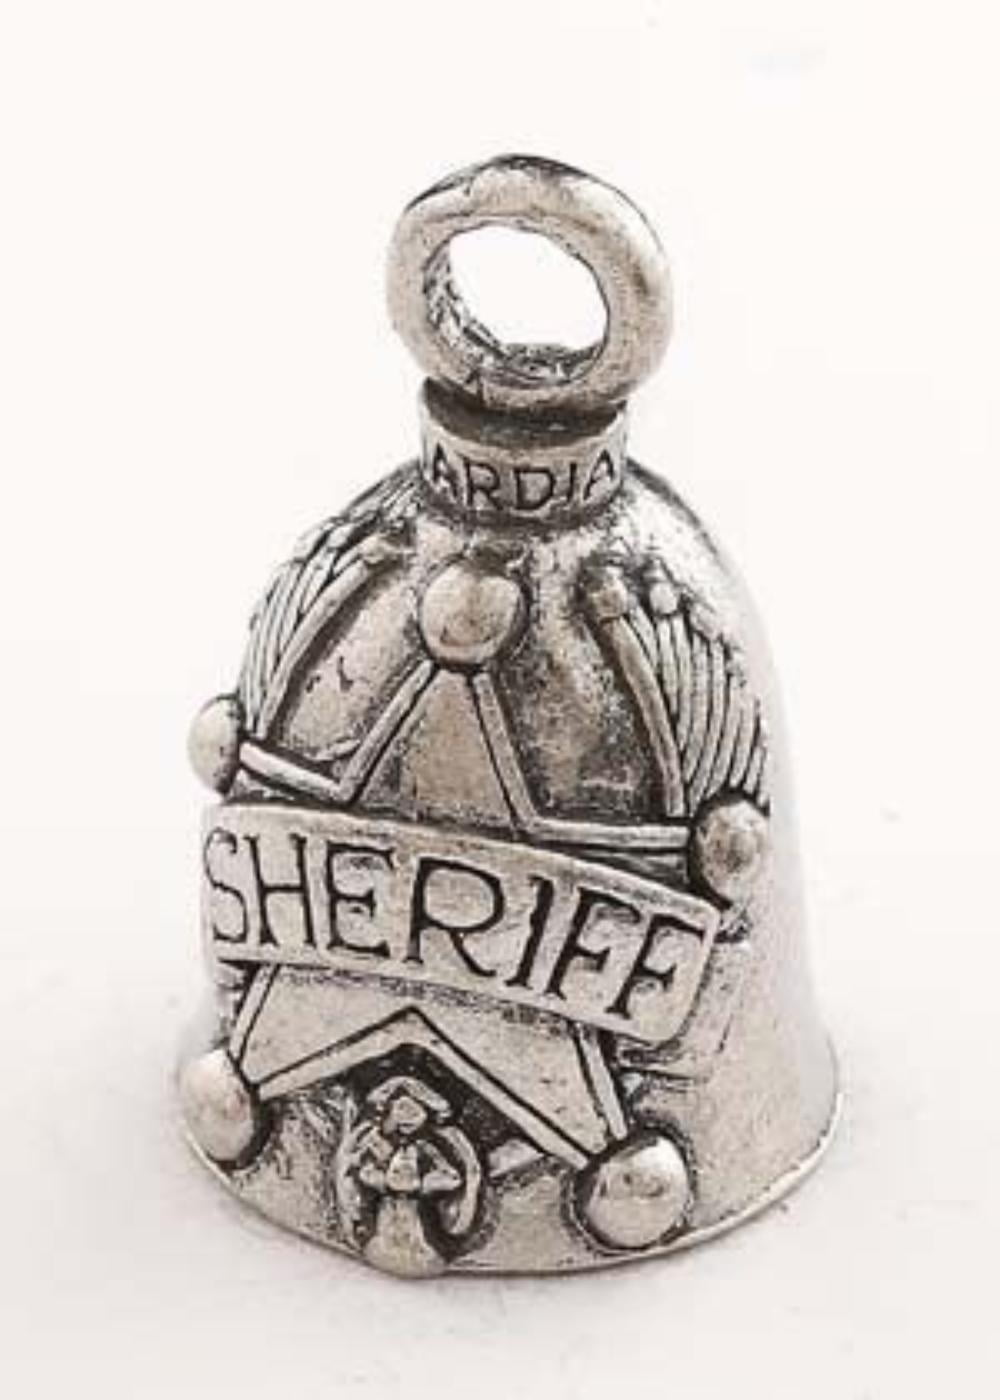 SHERIFF GUARDIAN BIKER BELL WITH HANGER 